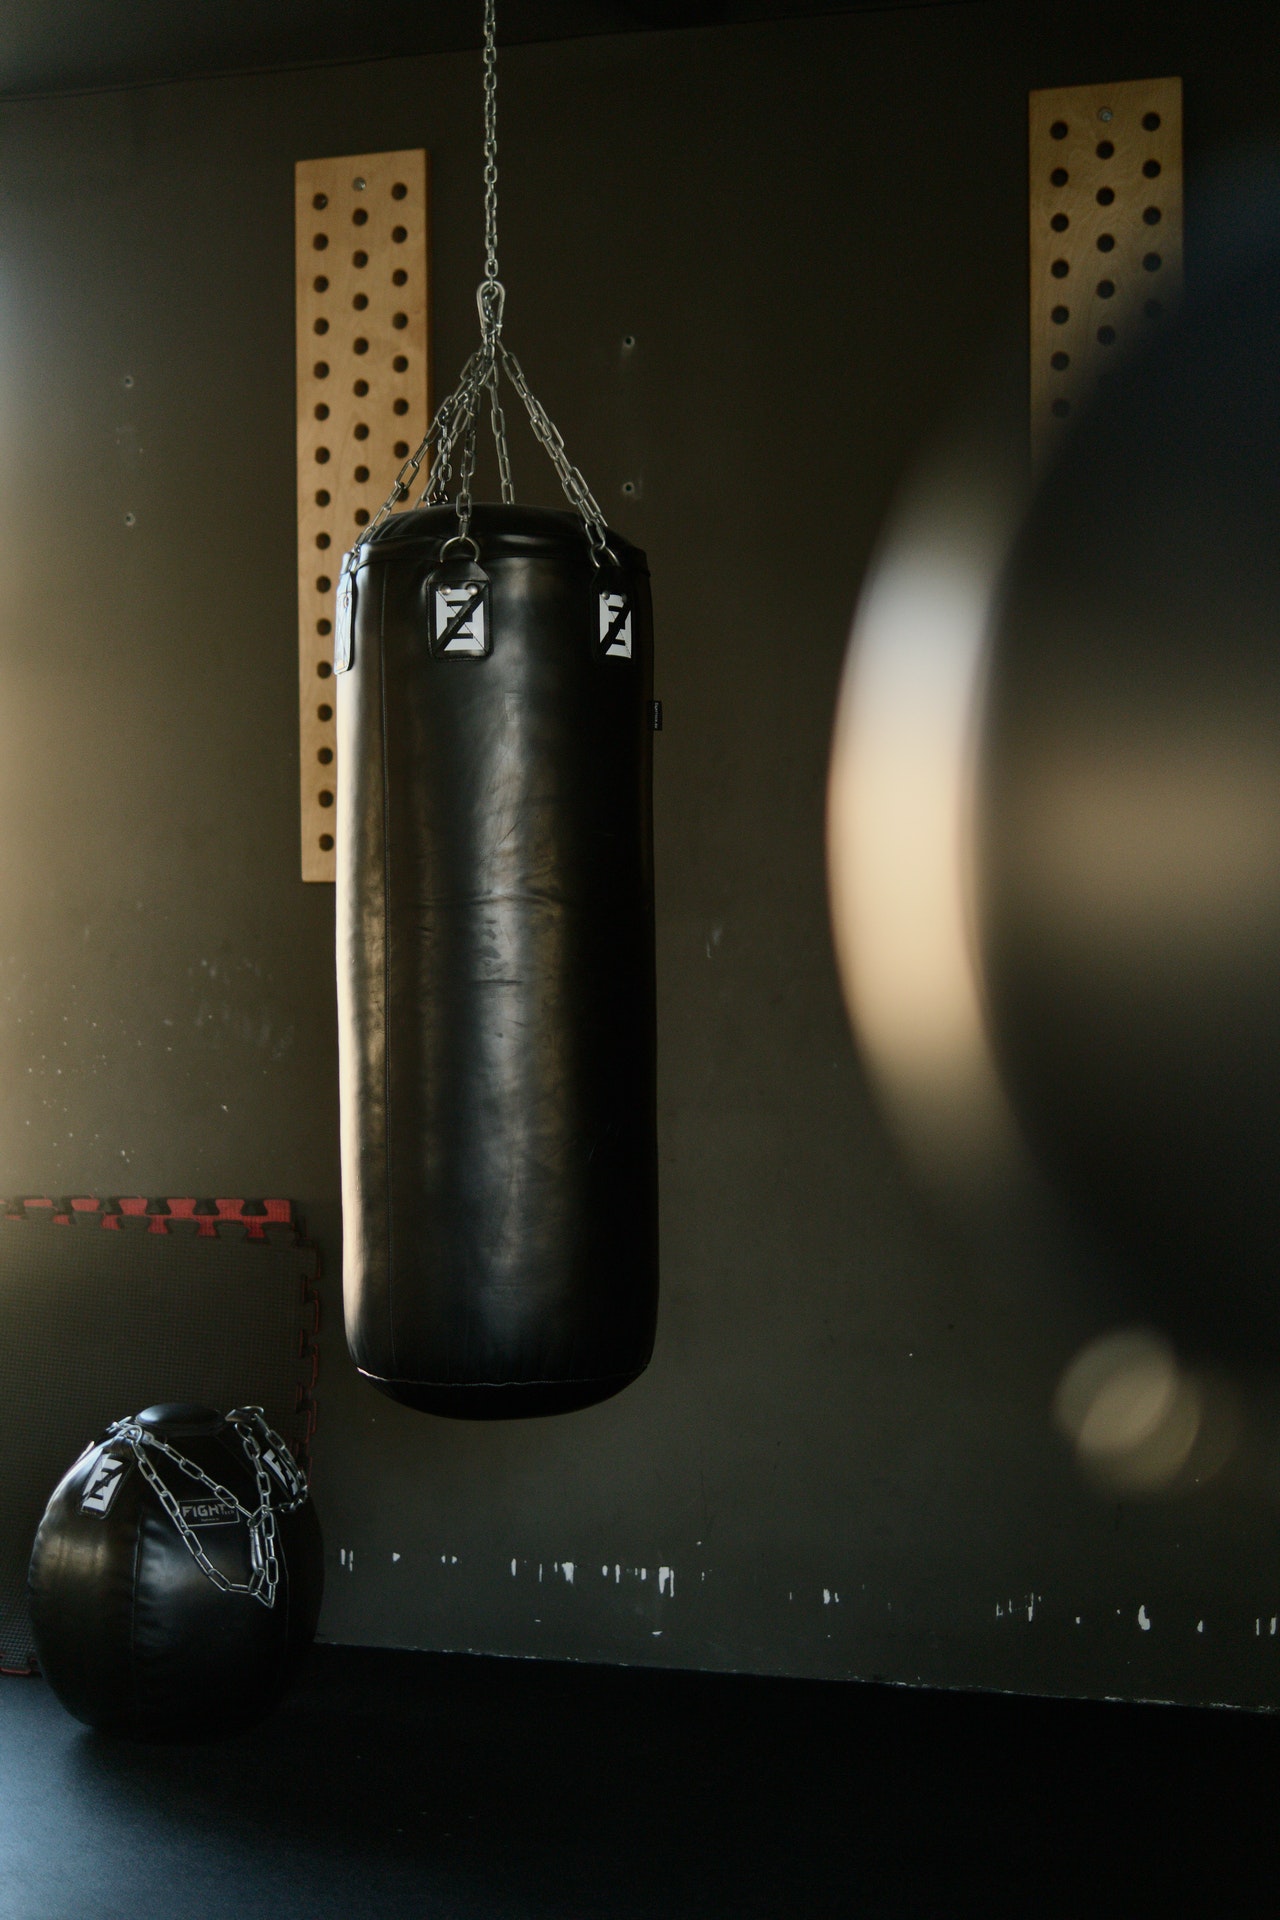 Black punching bag - How Big of a Punching bag Should I Get